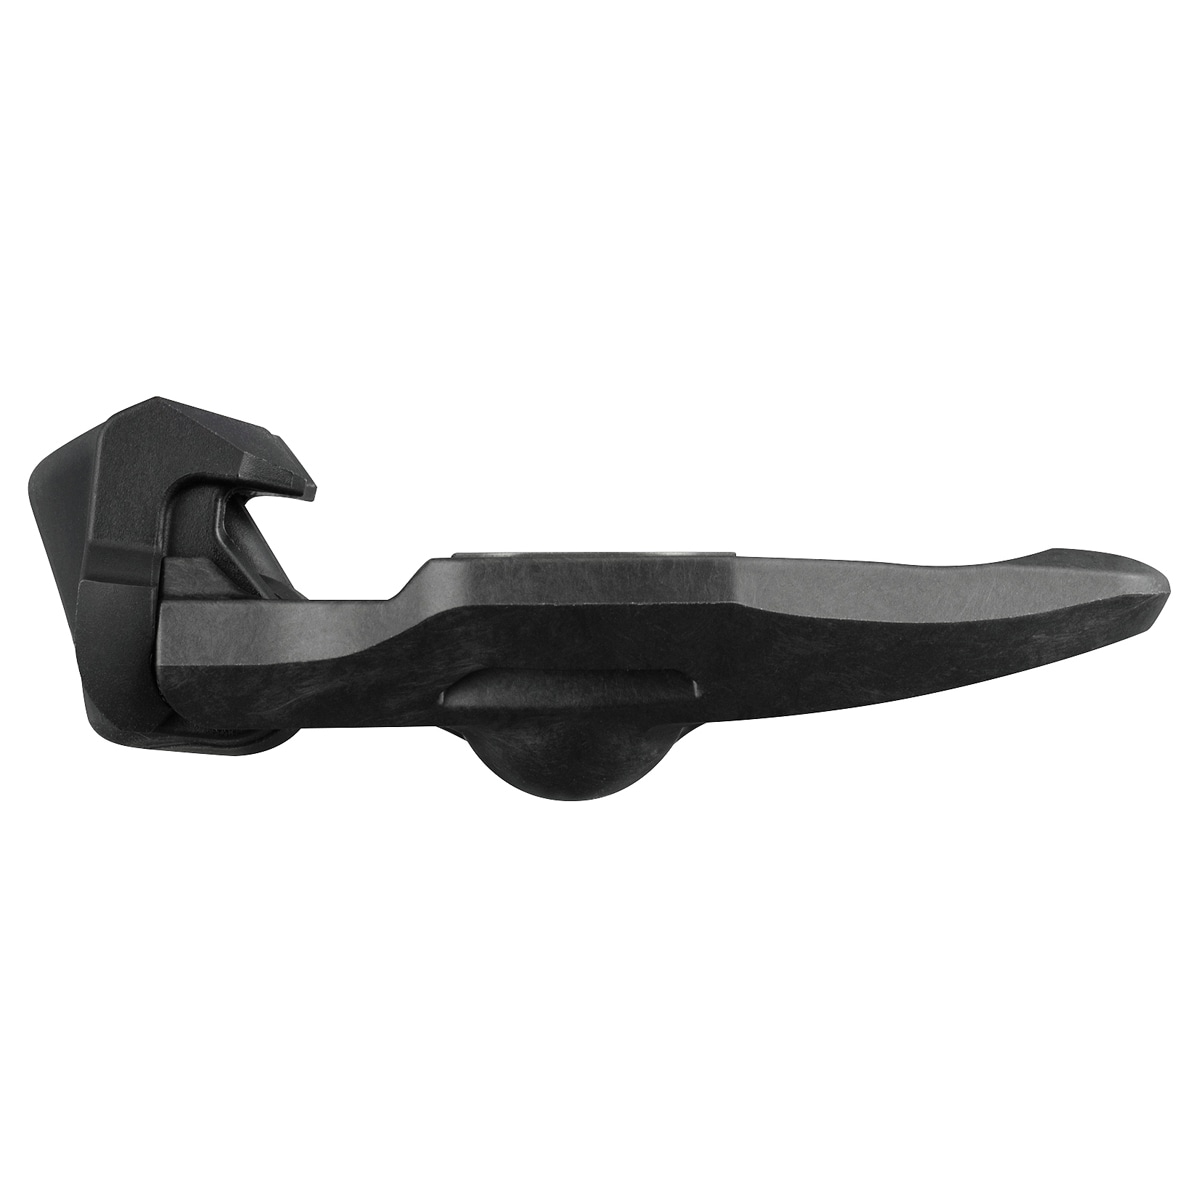 Shimano Pedal, Ultegra R8000 +4mm, Black